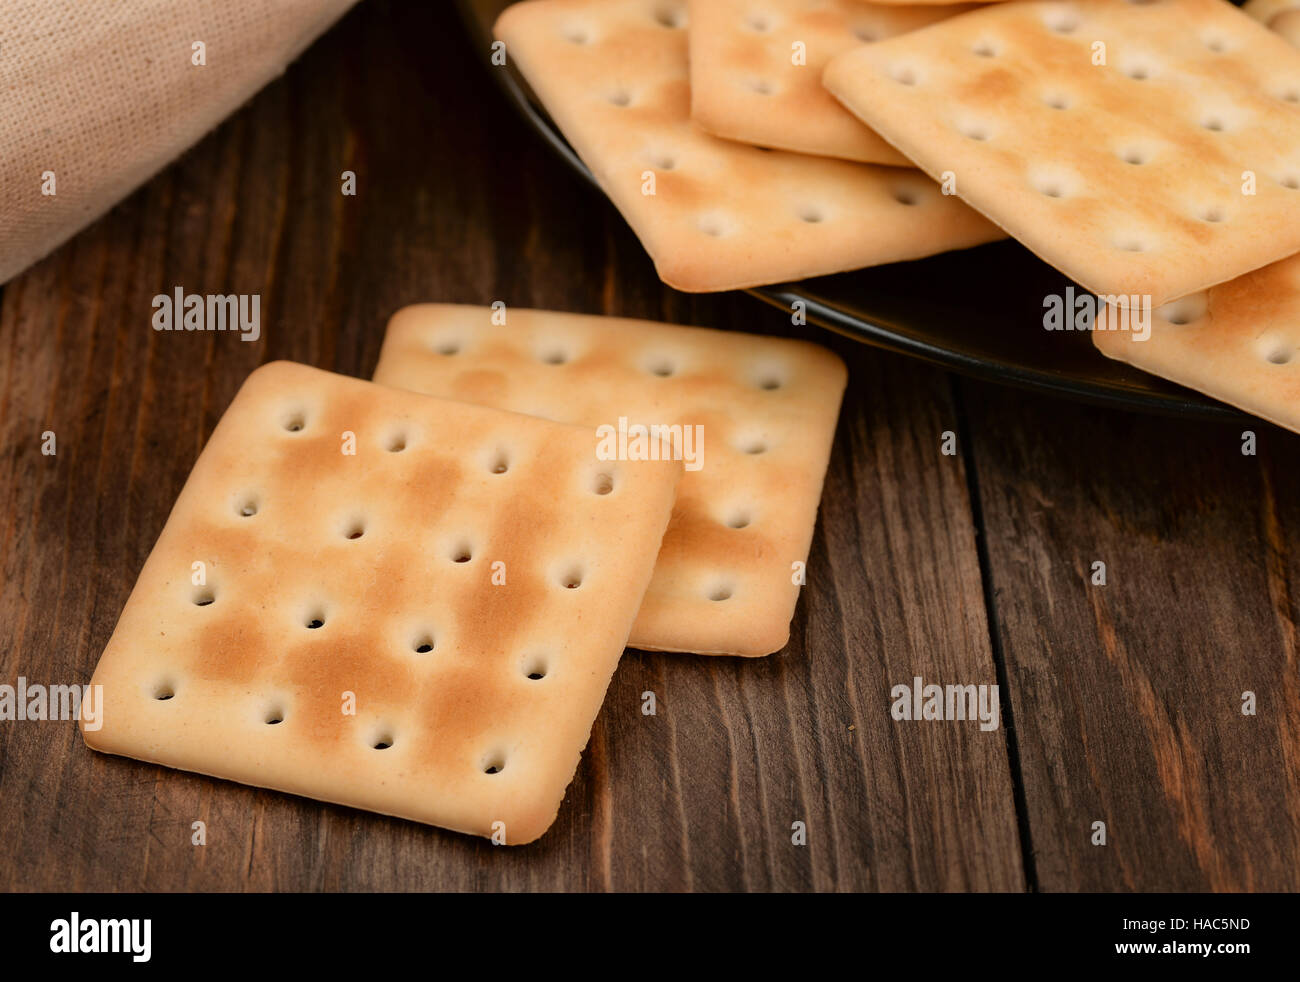 Saltine crackers on dark wooden table Stock Photo